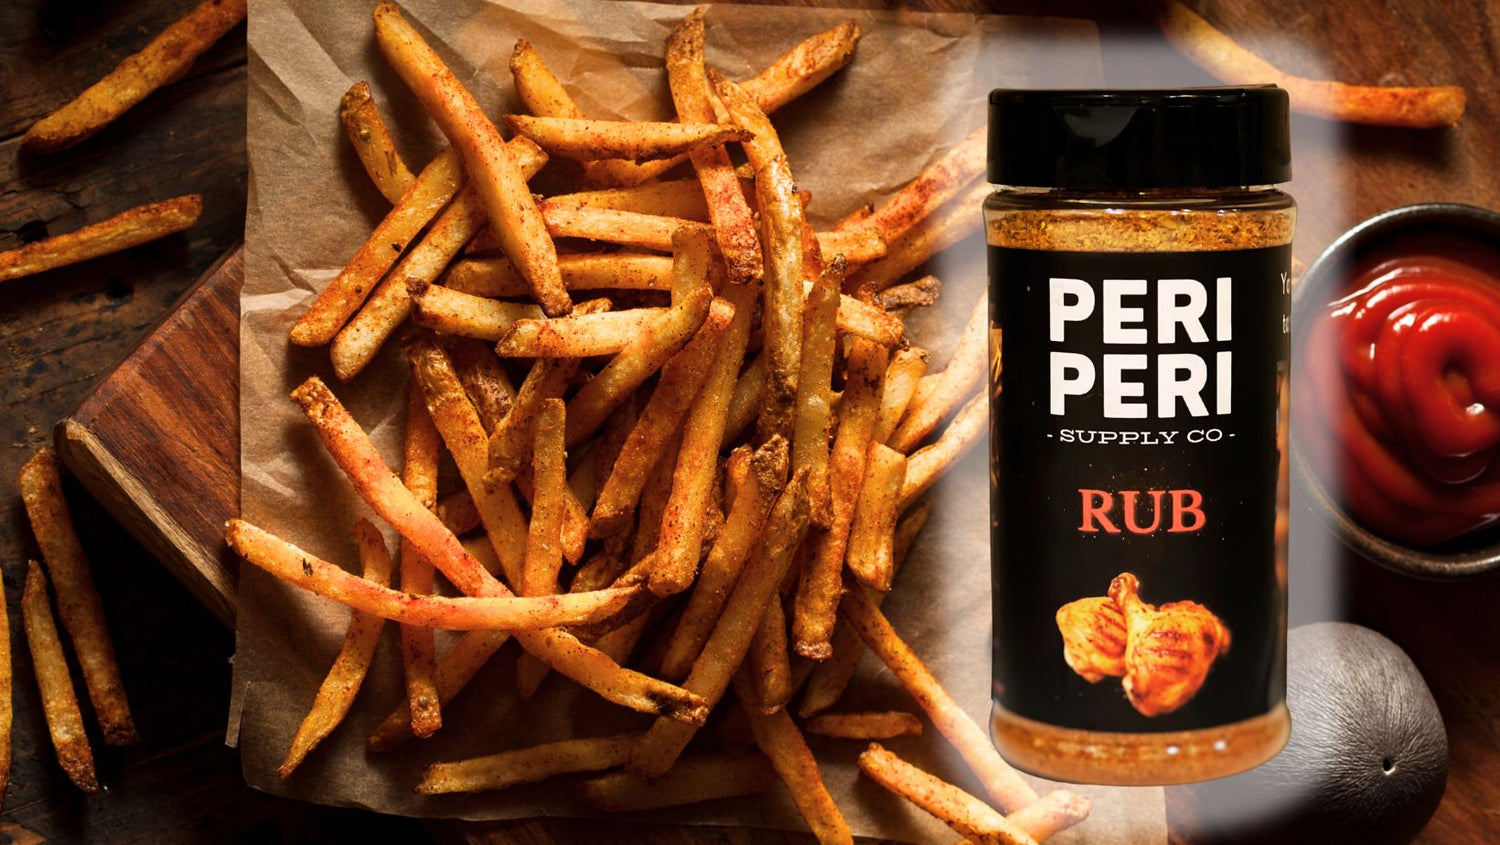 Peri Peri Rub is perfect on fries.  Make Peri Peri fries!